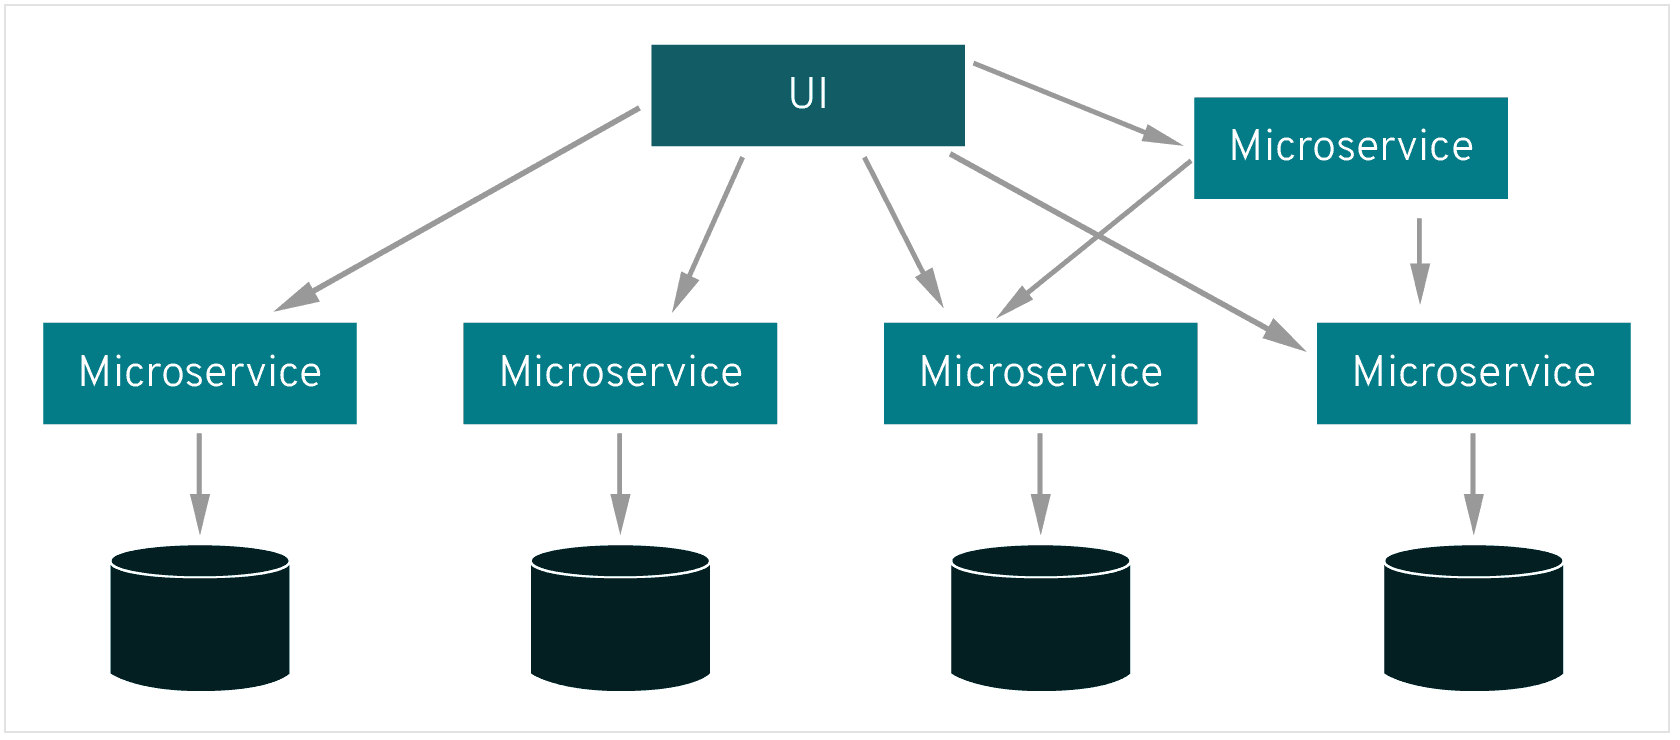 Microservices architecture